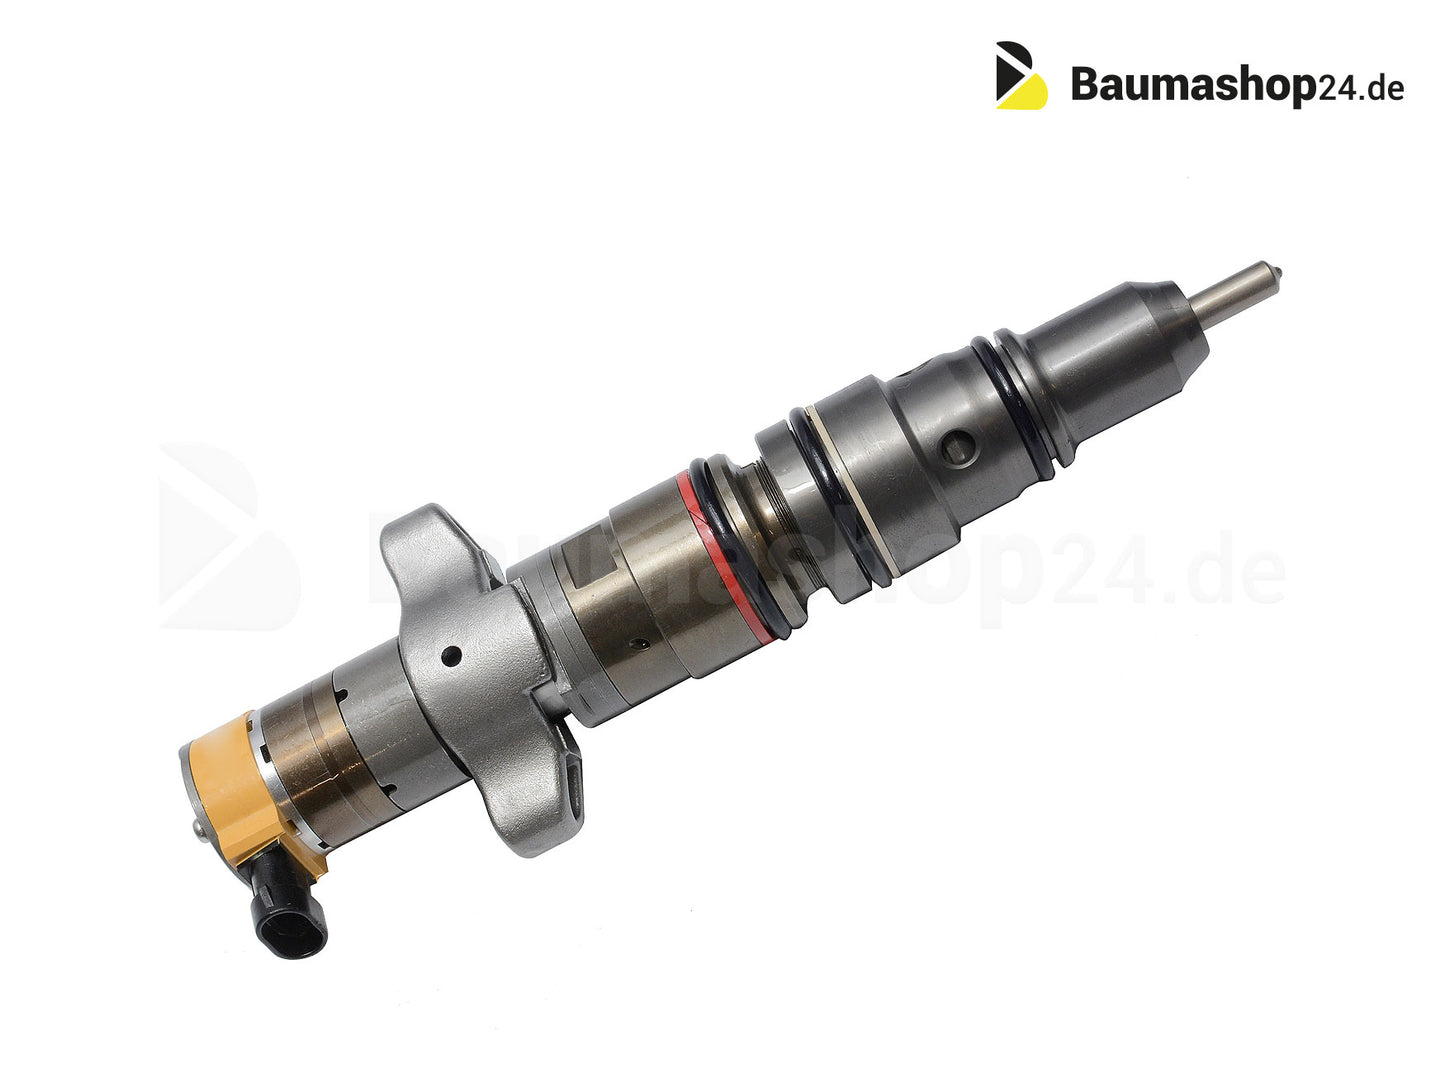 Caterpillar Fuel Injector / Injector 293-4073 for 330D / 330D L